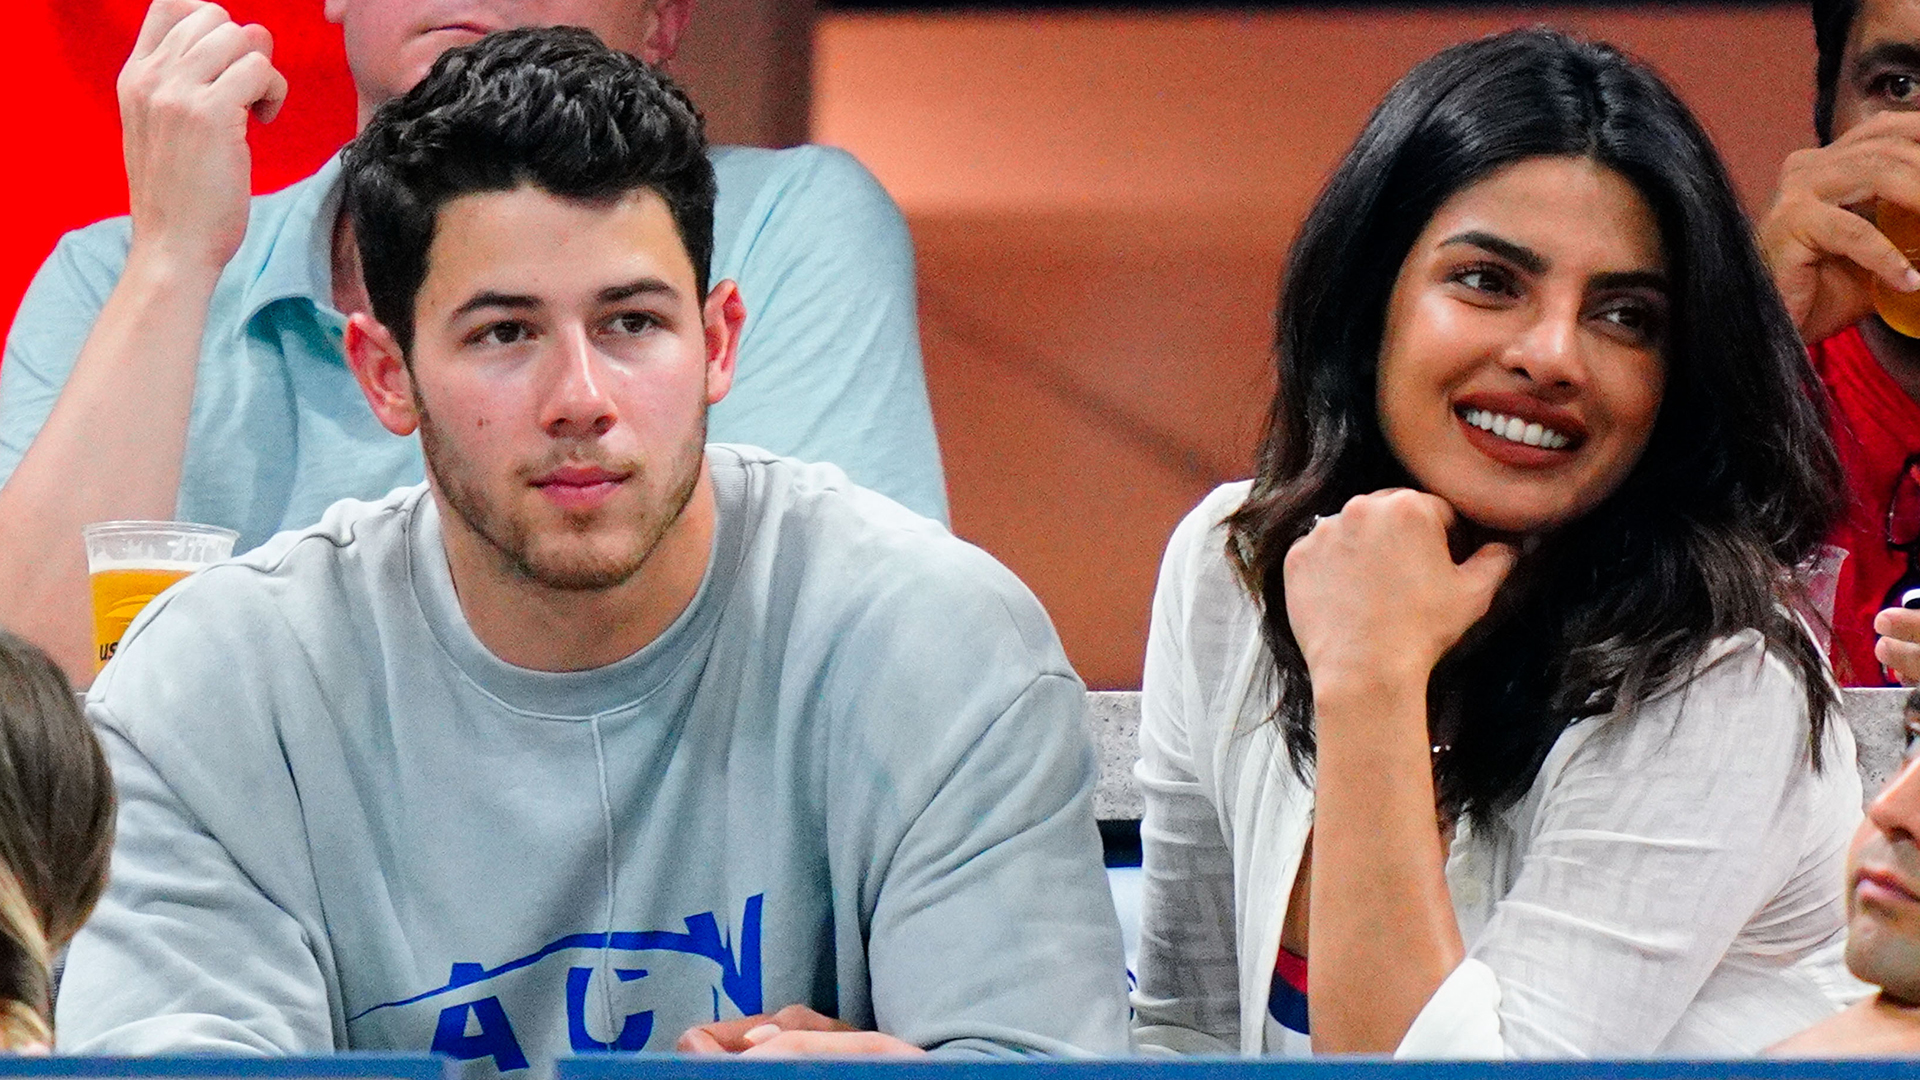 Nick Jonas And Priyanka Chopra To Sue US Magazine For Spreading Divorce Rumors